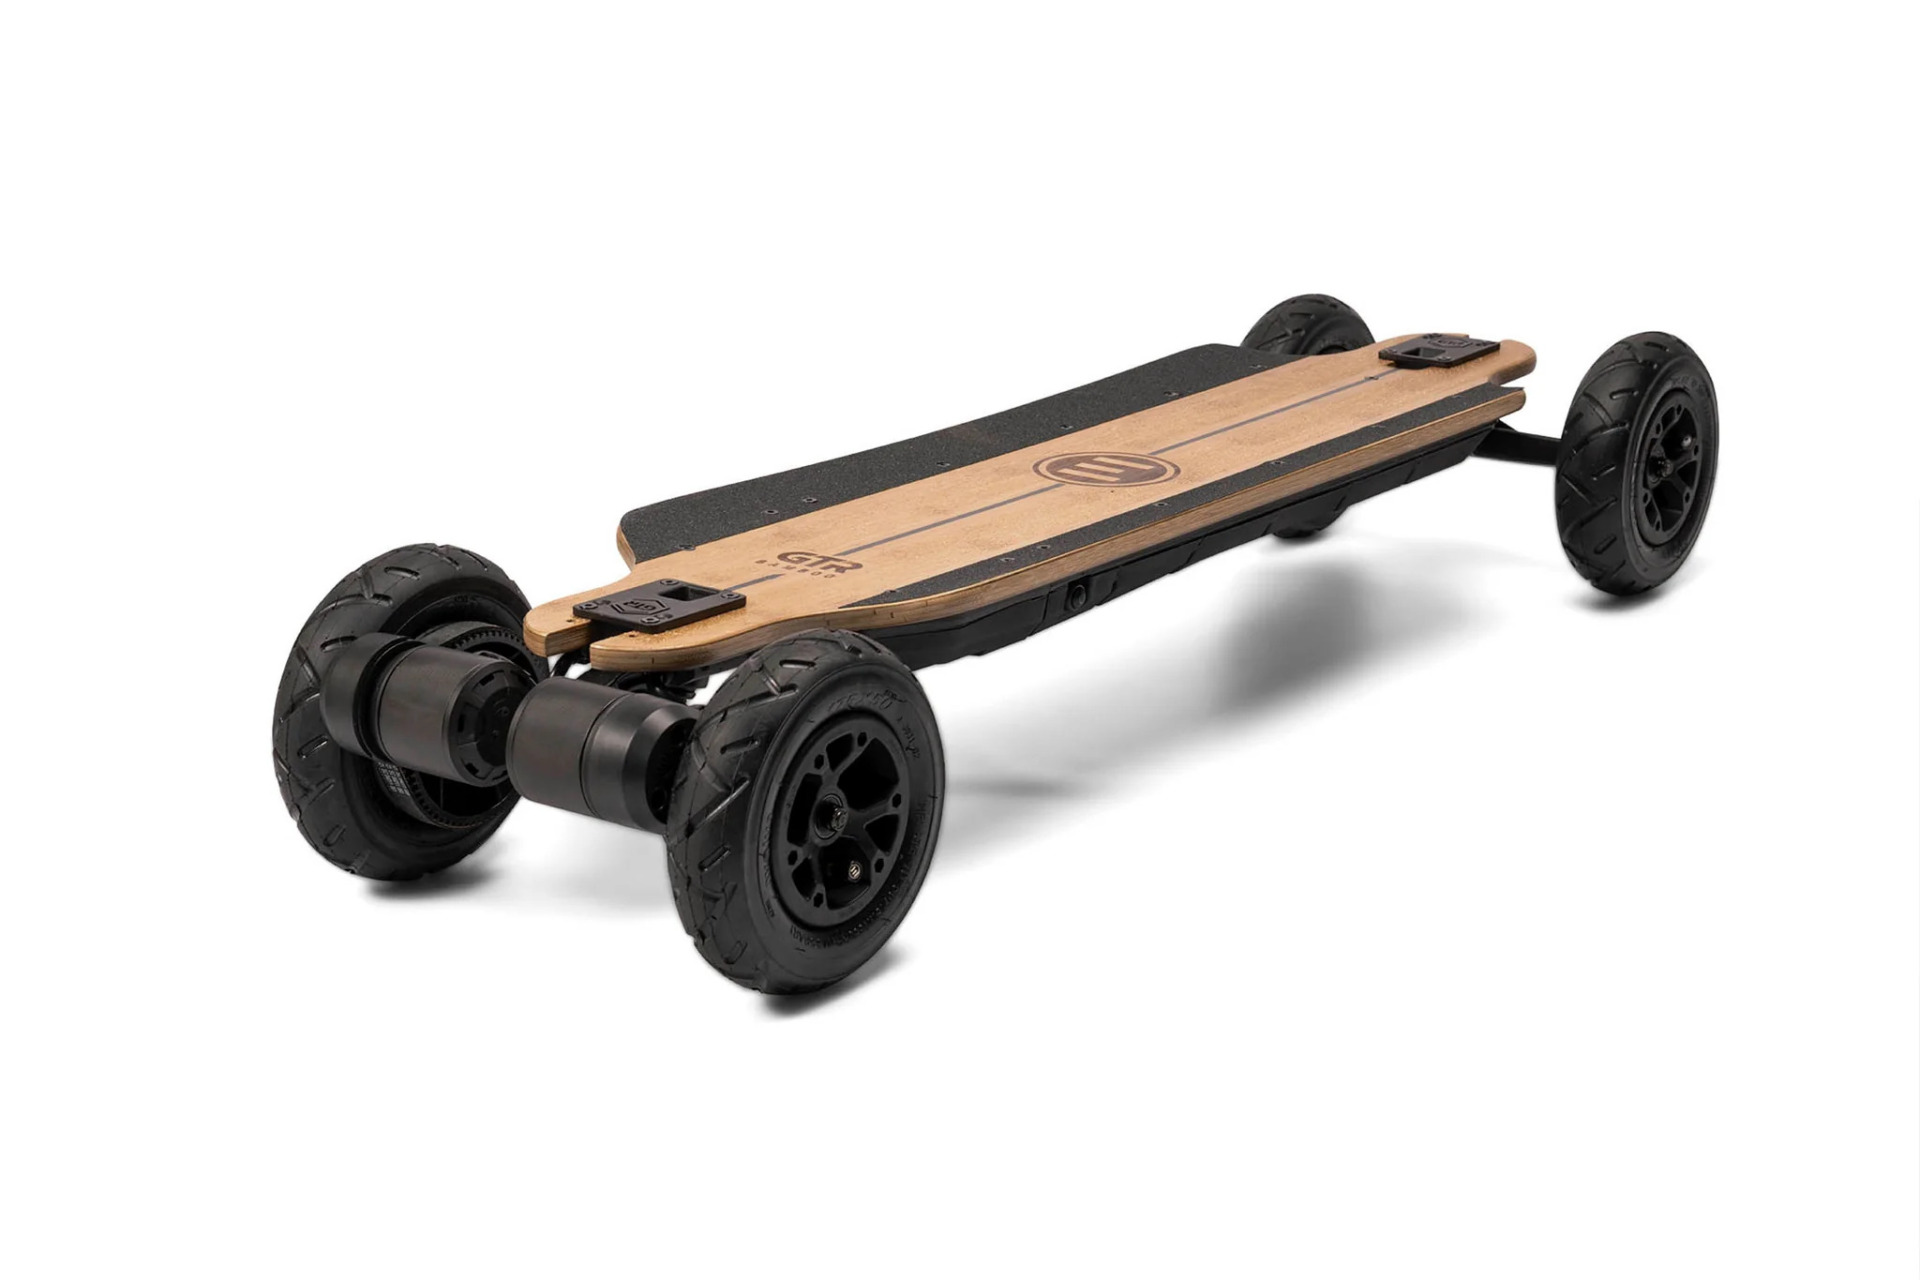 Evolve GTR 2 Bamboo All Terrain | New and updated e-skate | Voltride